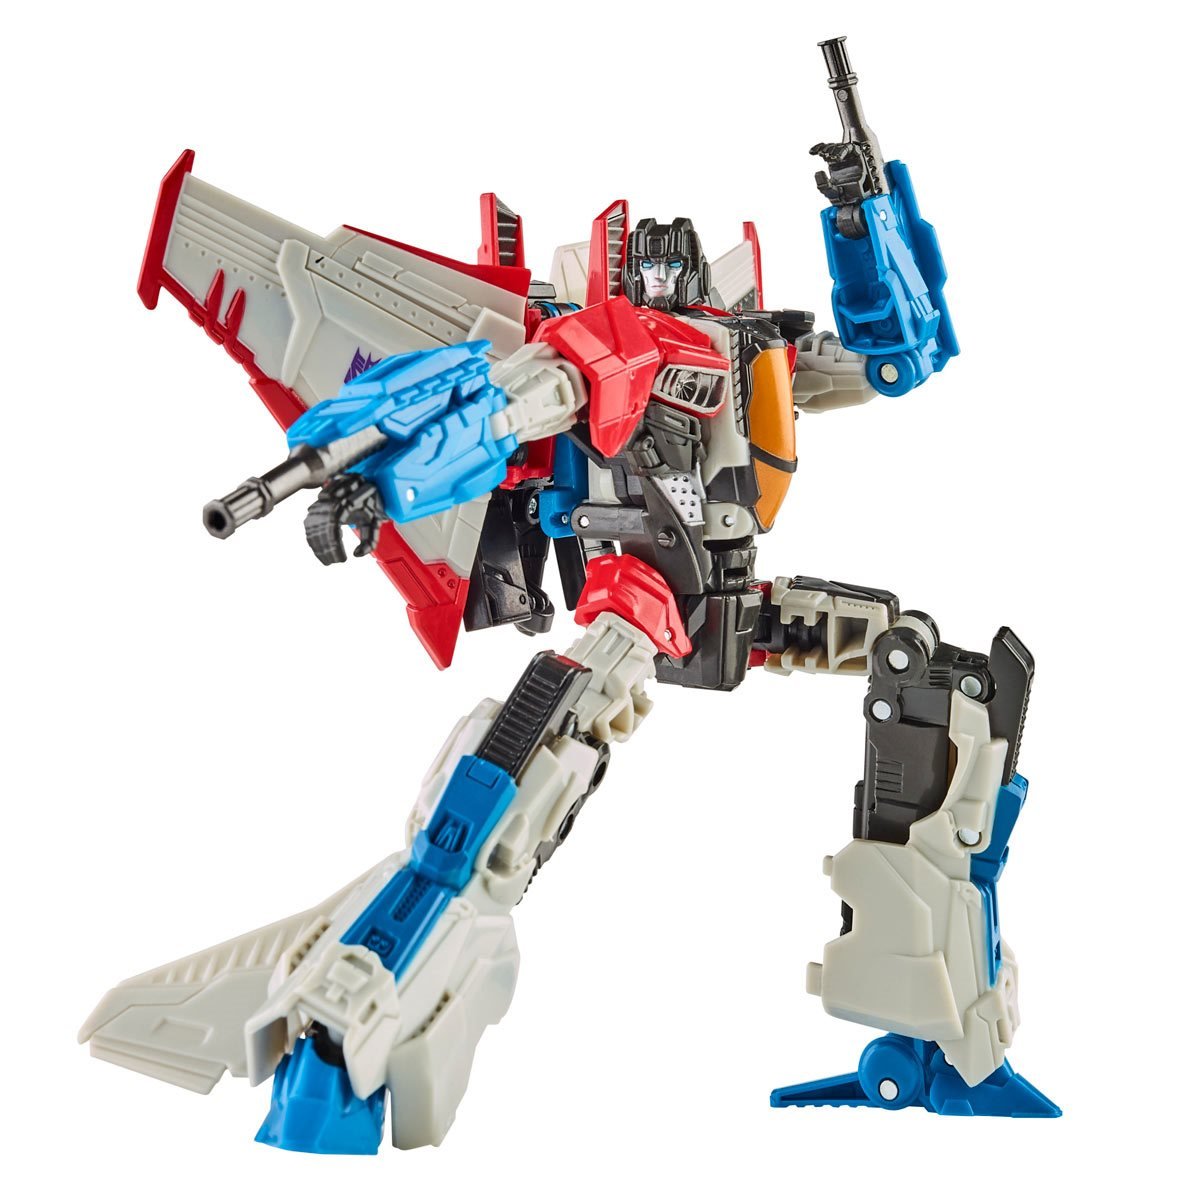 Transformers: Reactivate Optimus Prime and Soundwave Figures